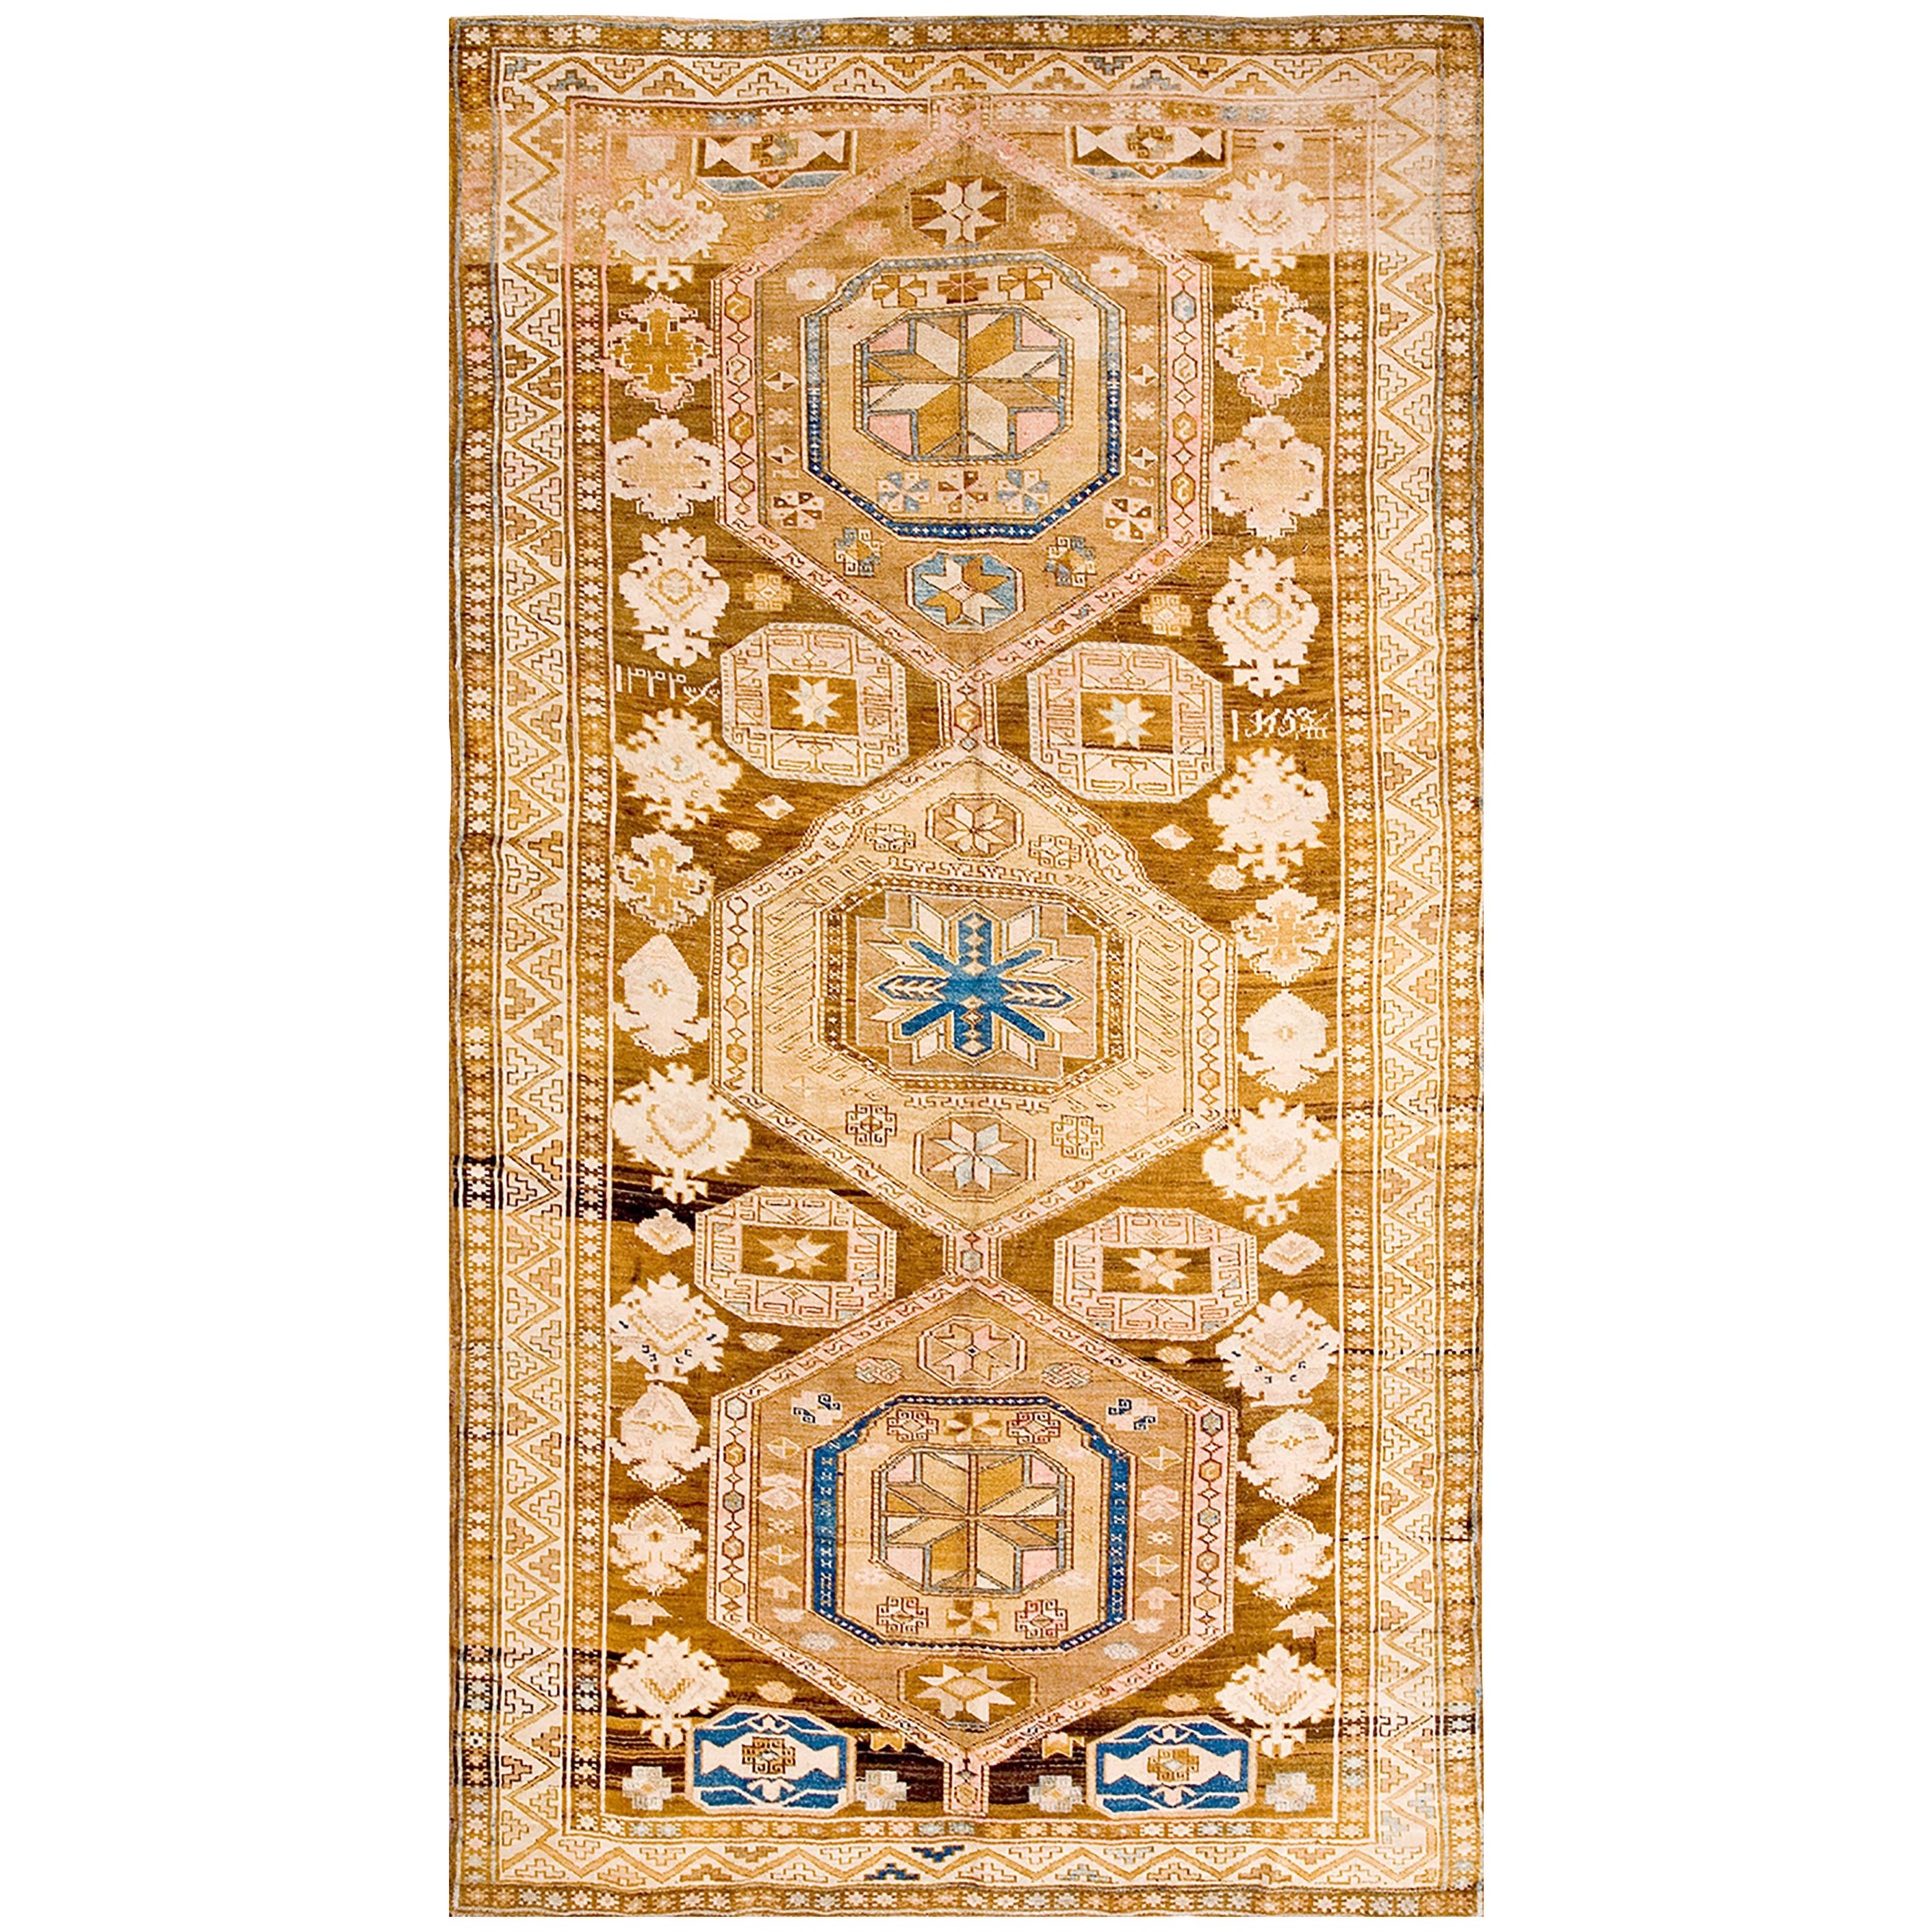 Late 19th Century Caucasian Karabagh Carpet ( 6 6" x 12'2" - 198 x 371 ) For Sale